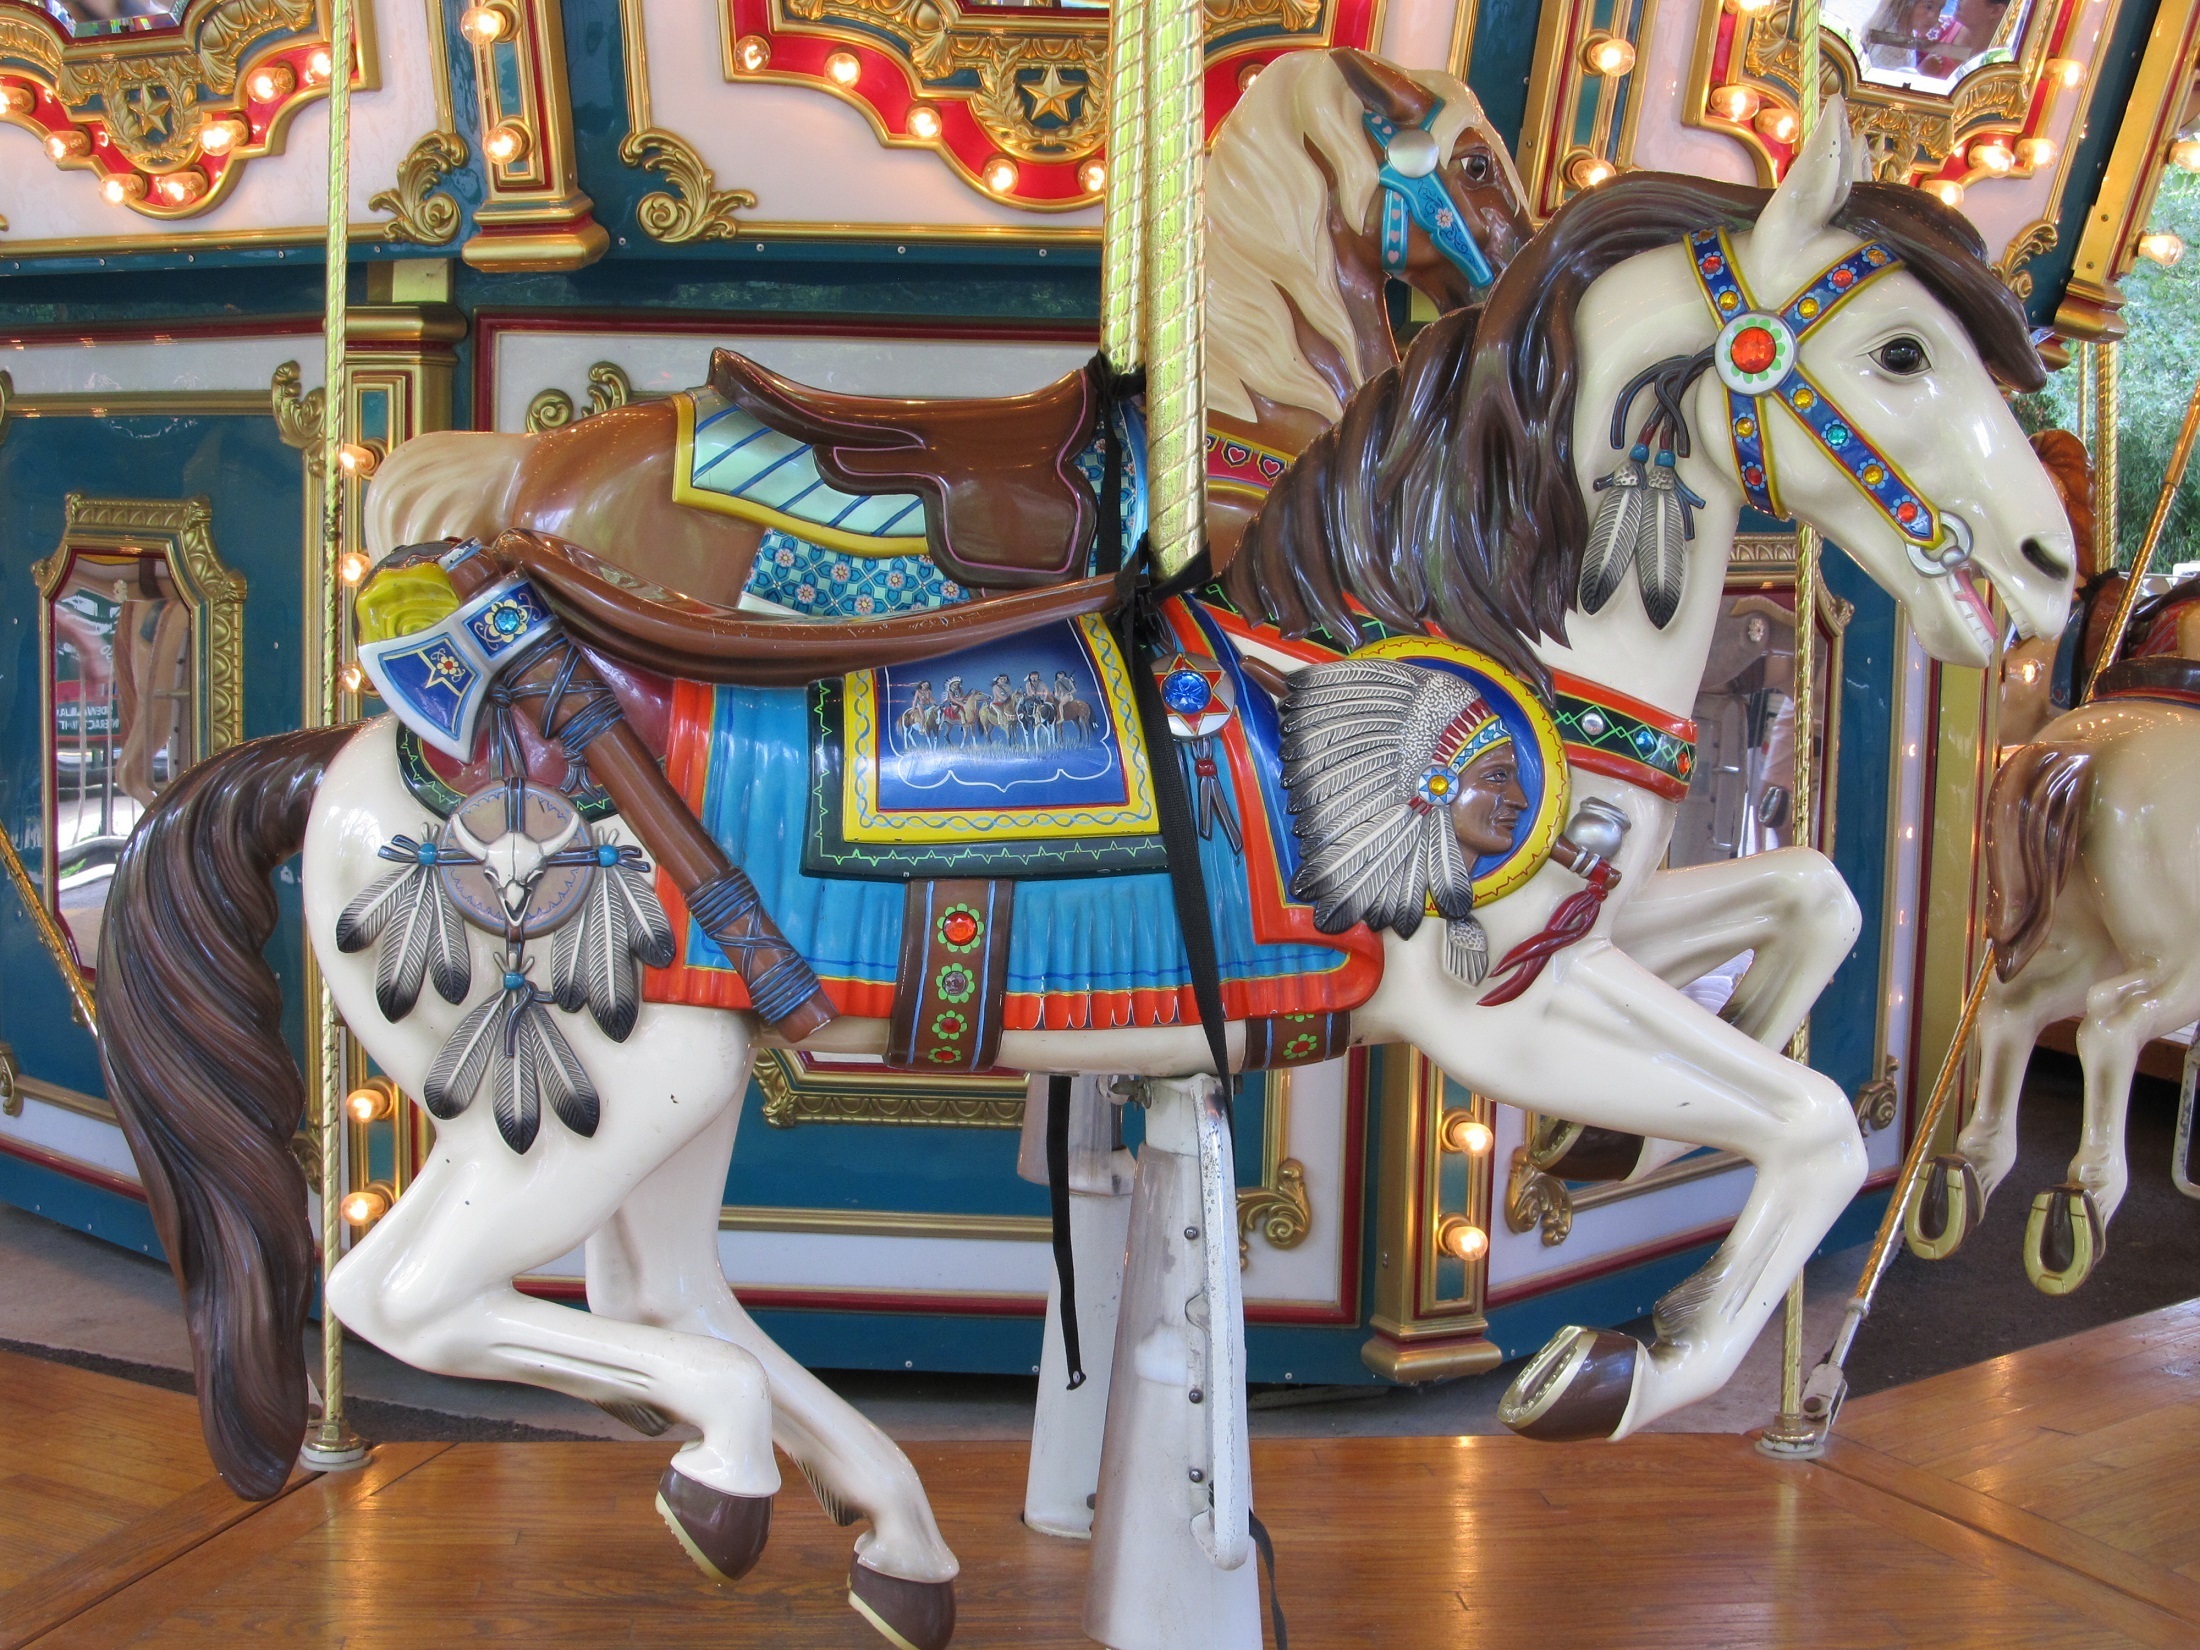 carousel, man made, horse, merry go 'round, retro, vintage